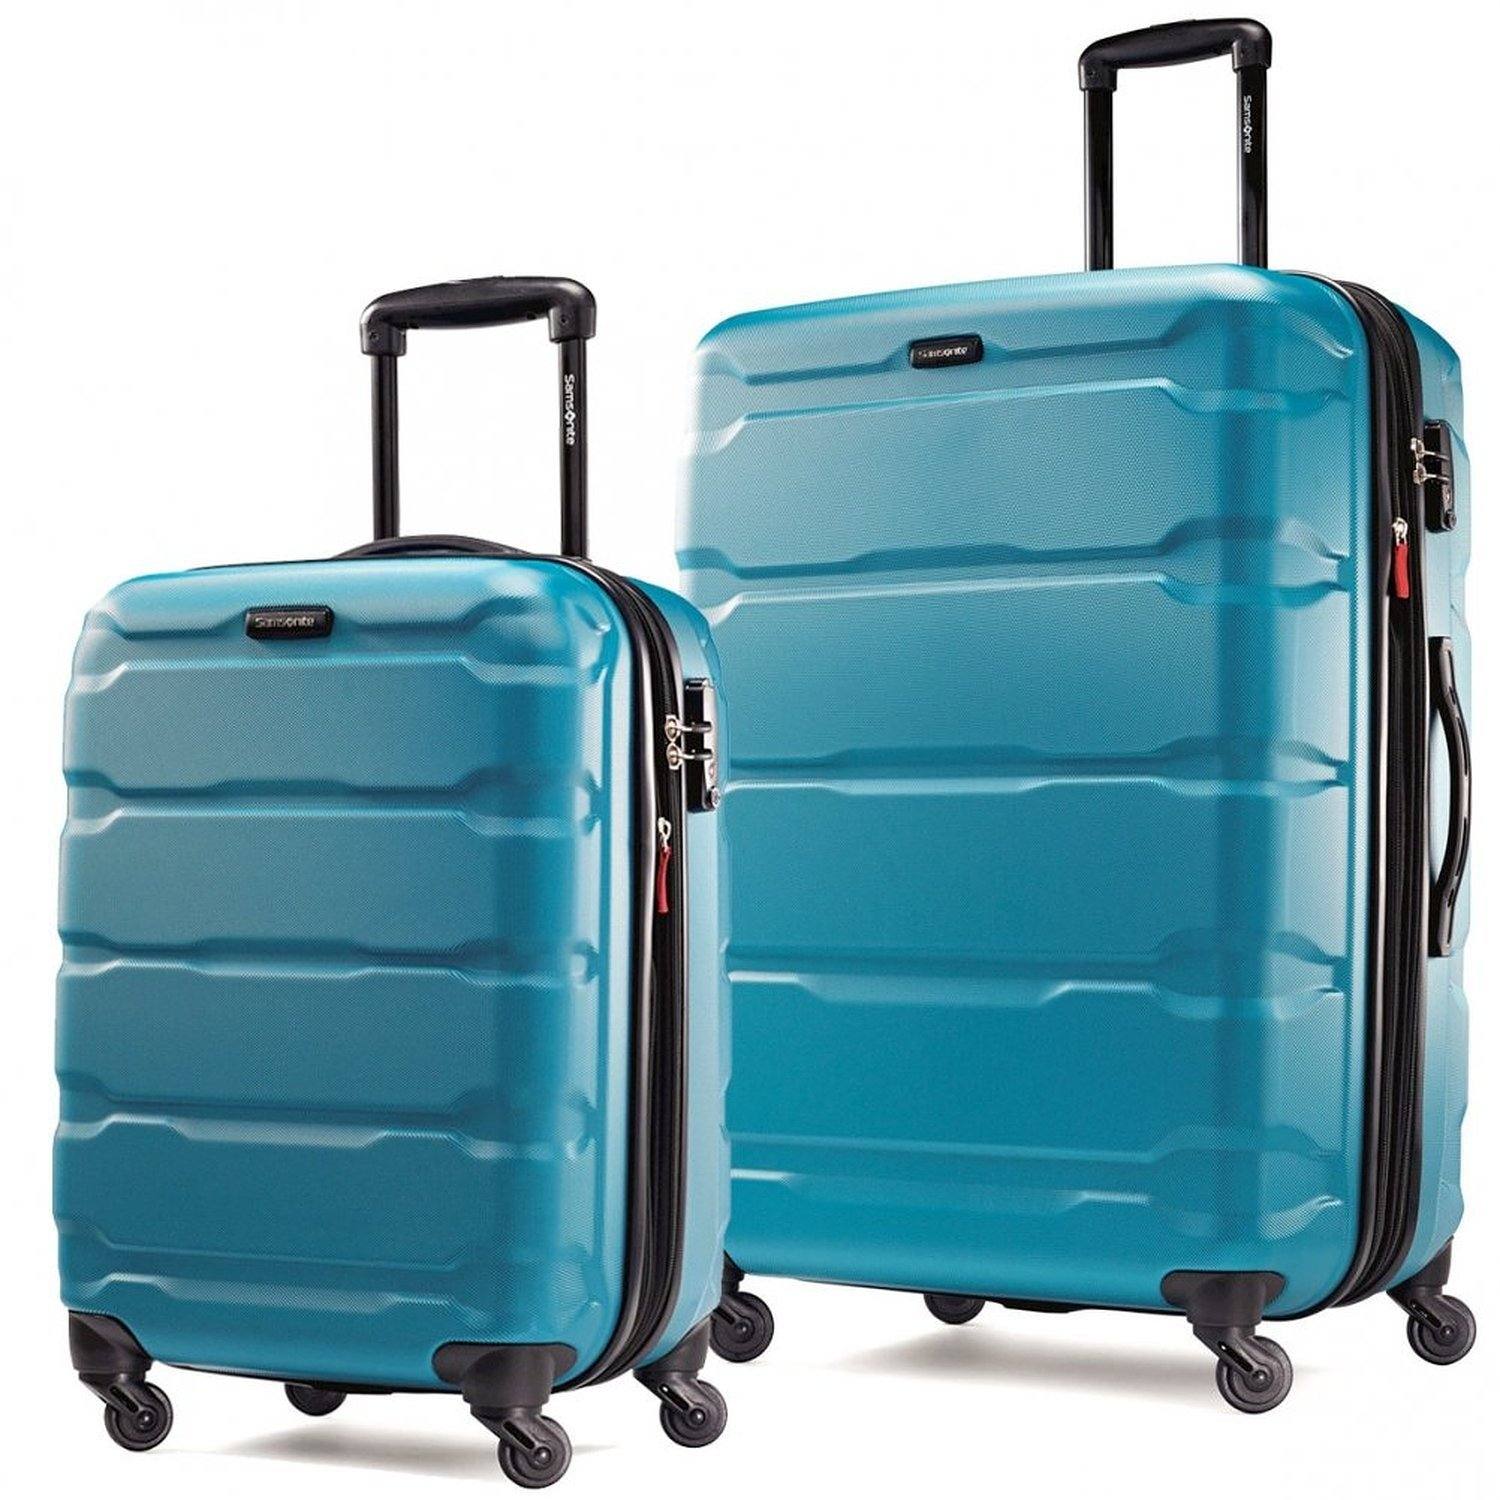 Nonstop New York 3 Piece Set (20 24 28) 4-Wheel Luggage Set + 2 Packing Cubes, Teal